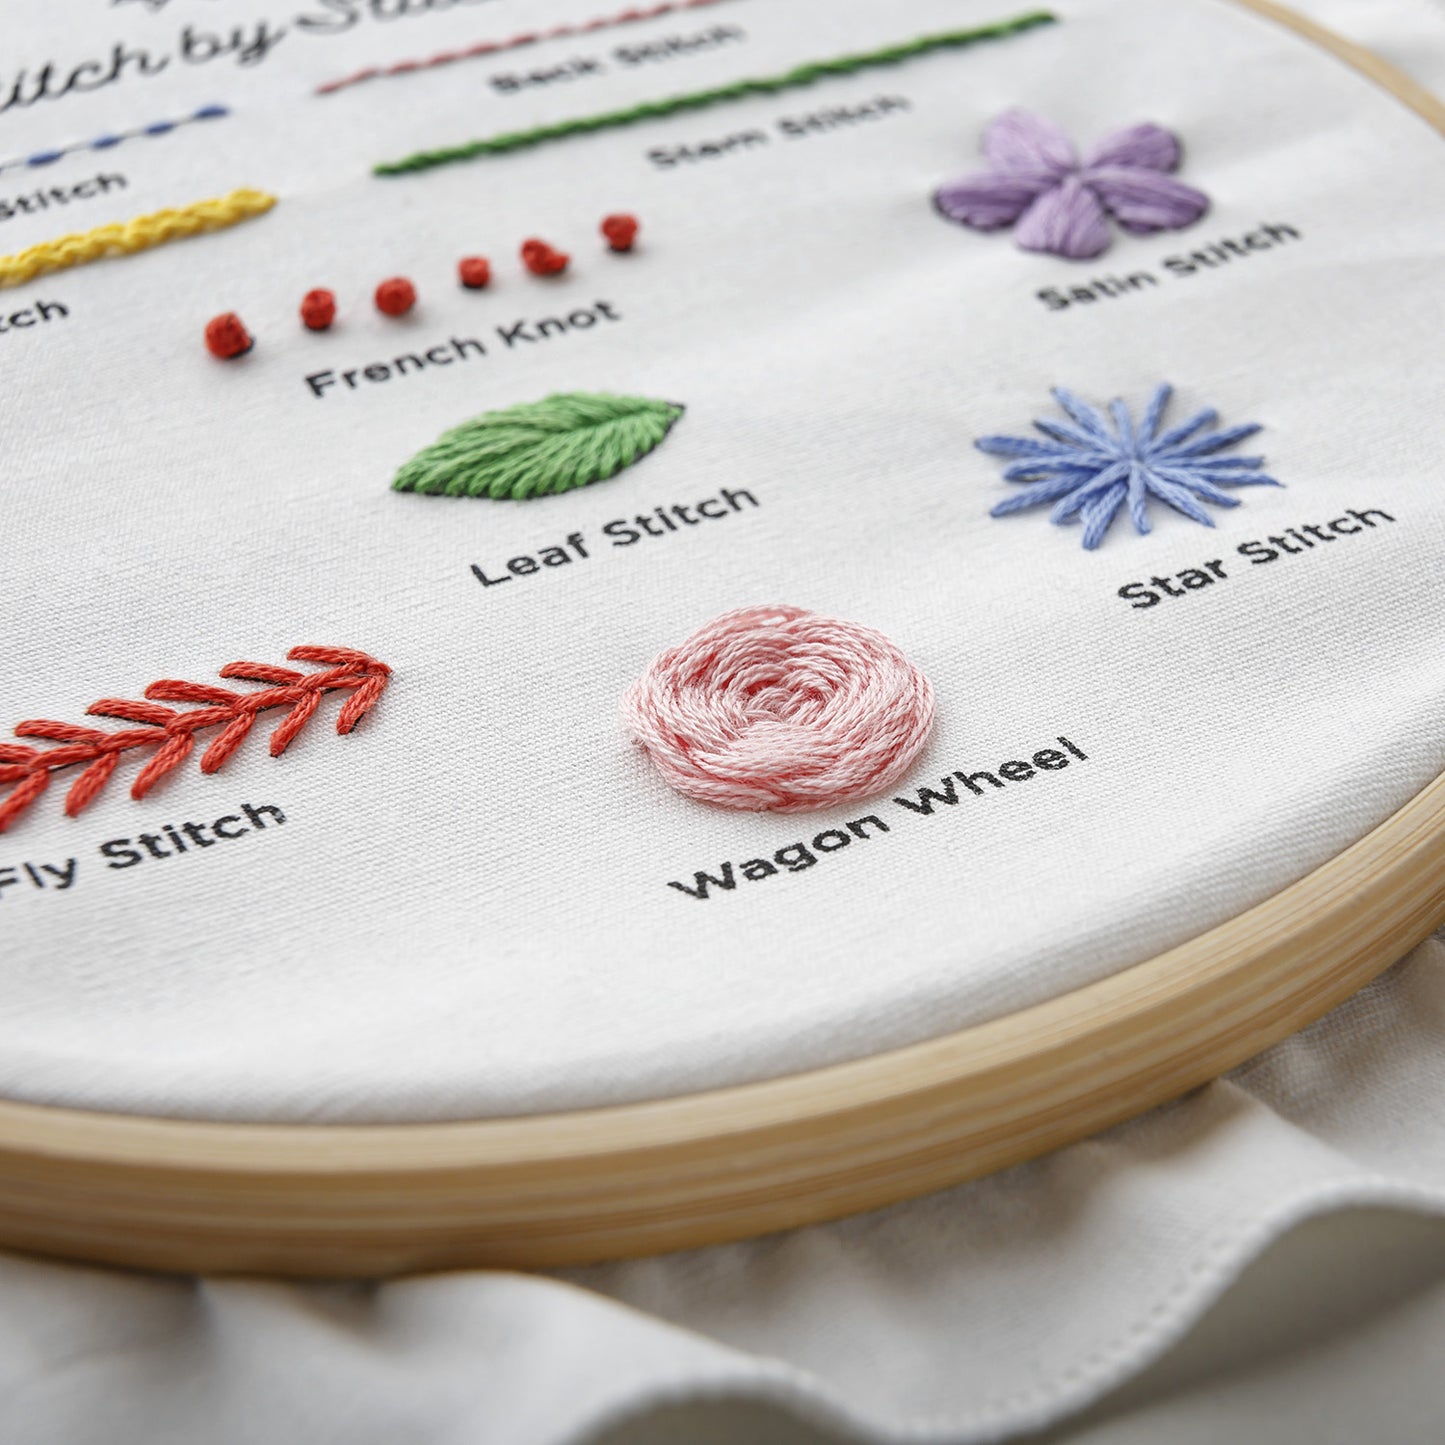 PREORDER - Learn Embroidery Stitch by Stitch with Missouri Star Alternative View #13